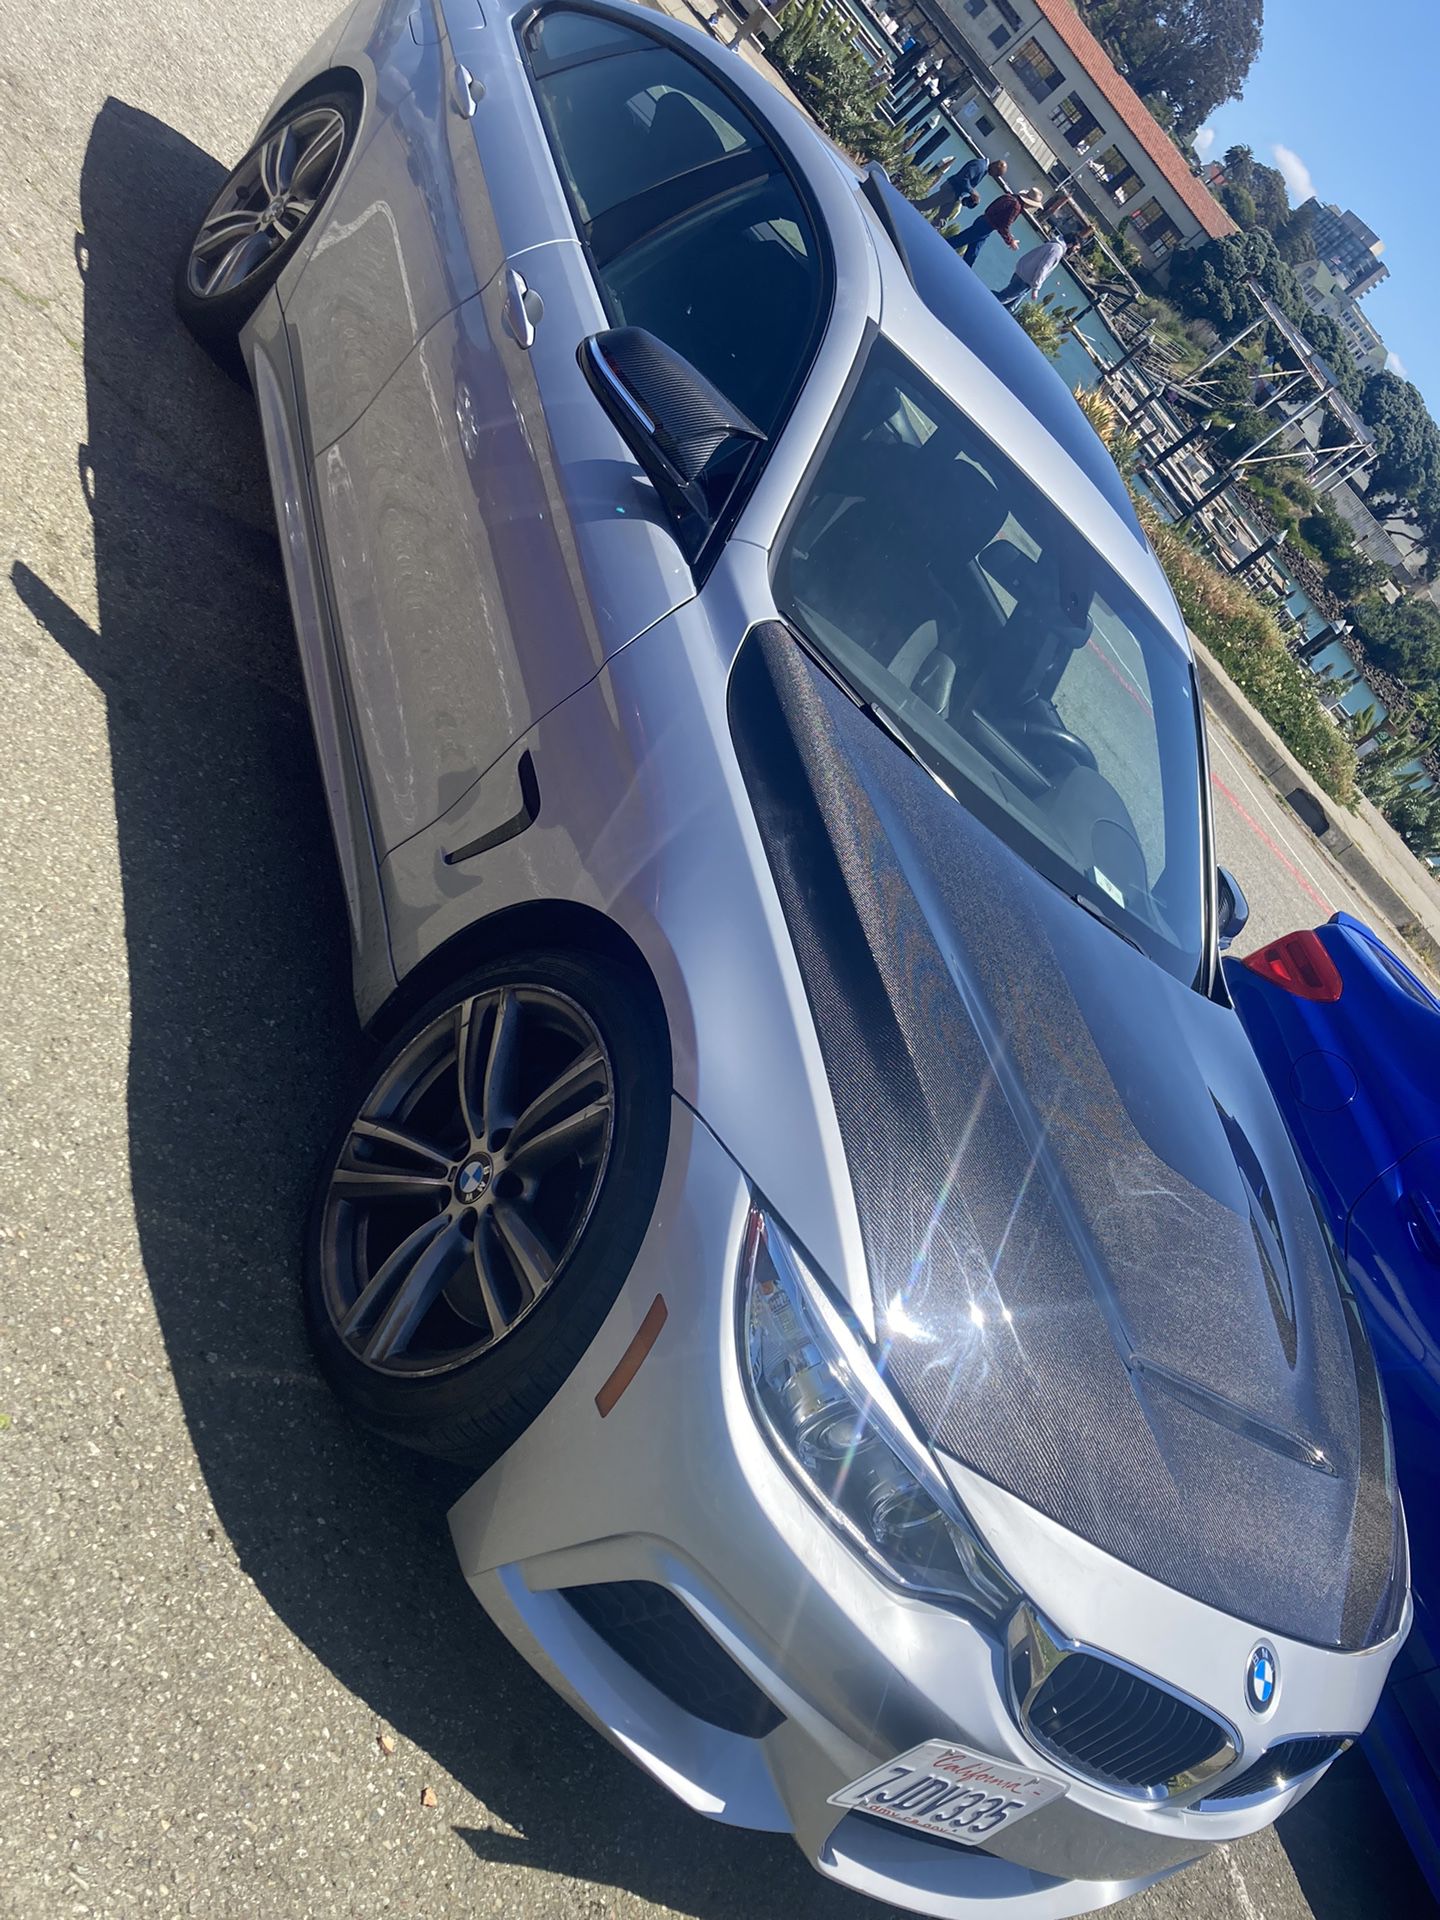 2015 BMW 4 SeriesGran Coupe